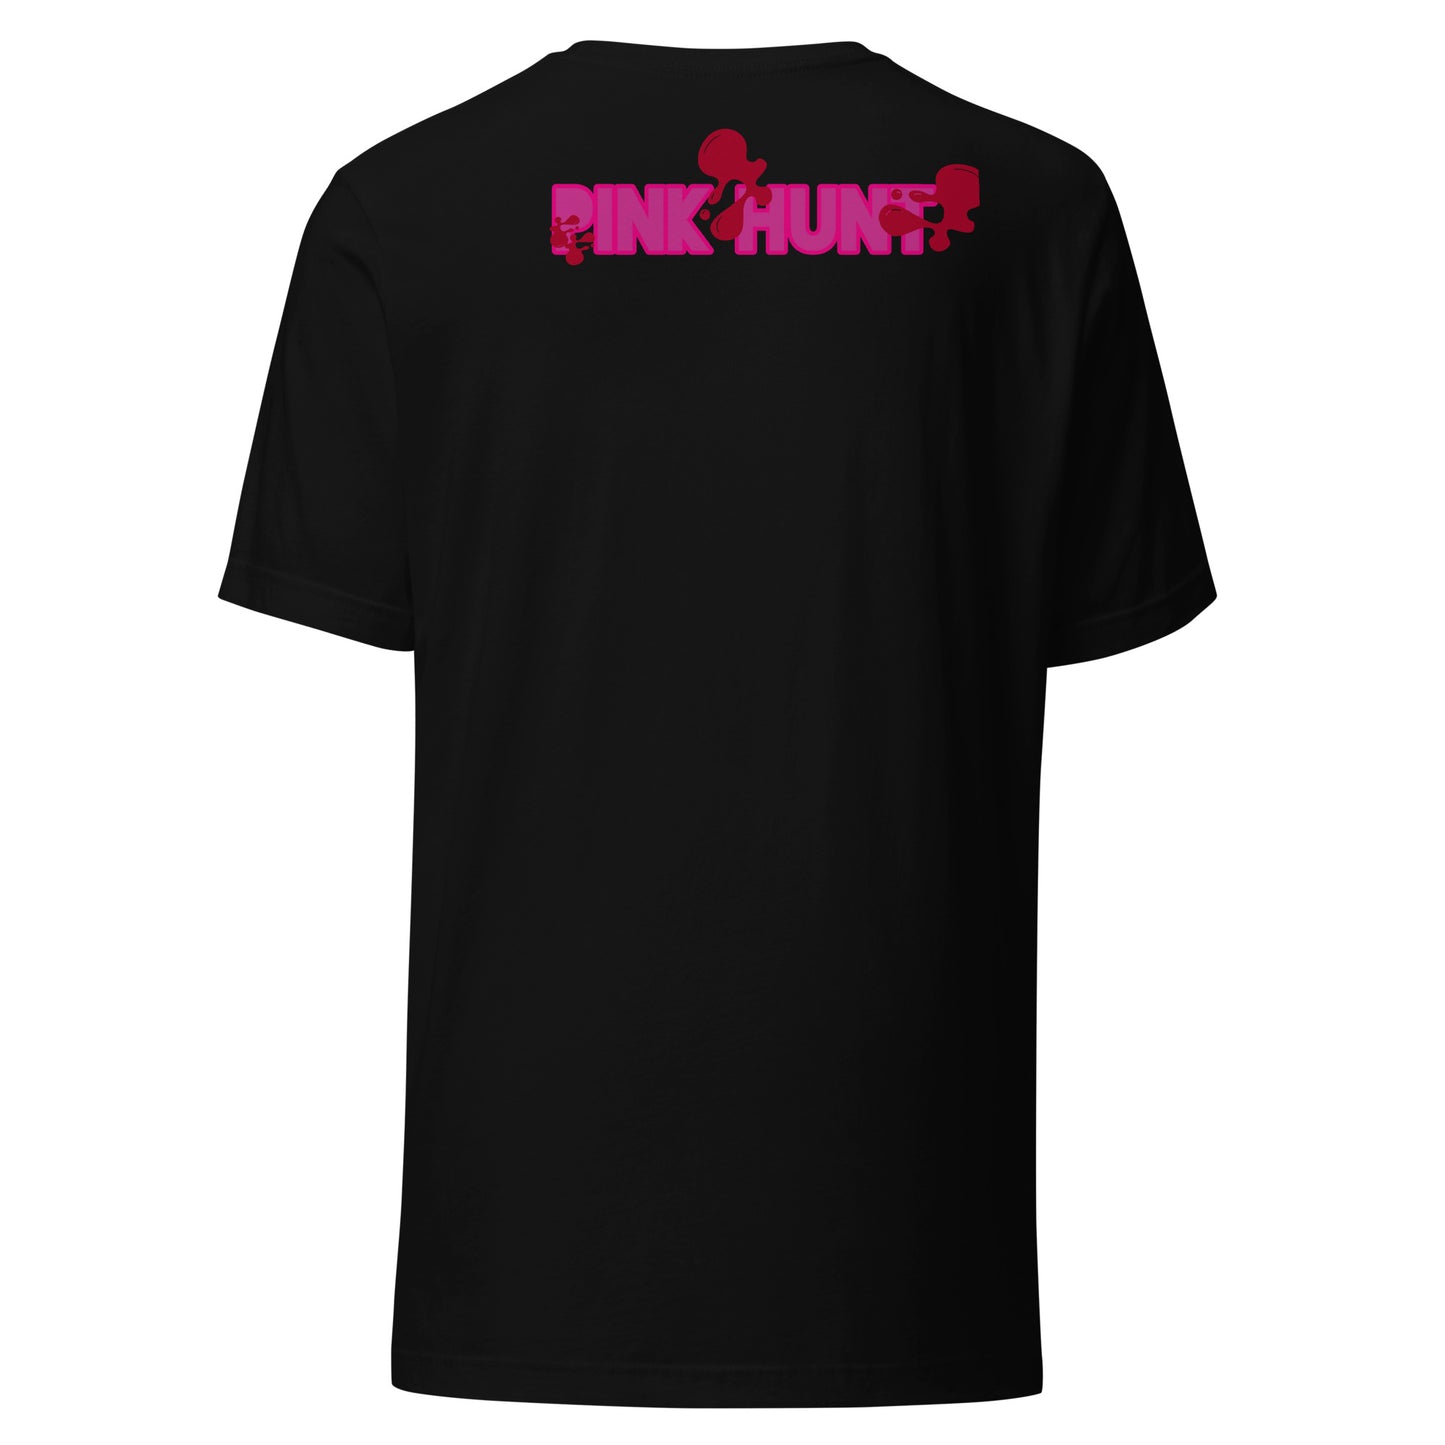 PINK HUNT - Unisex t-shirt